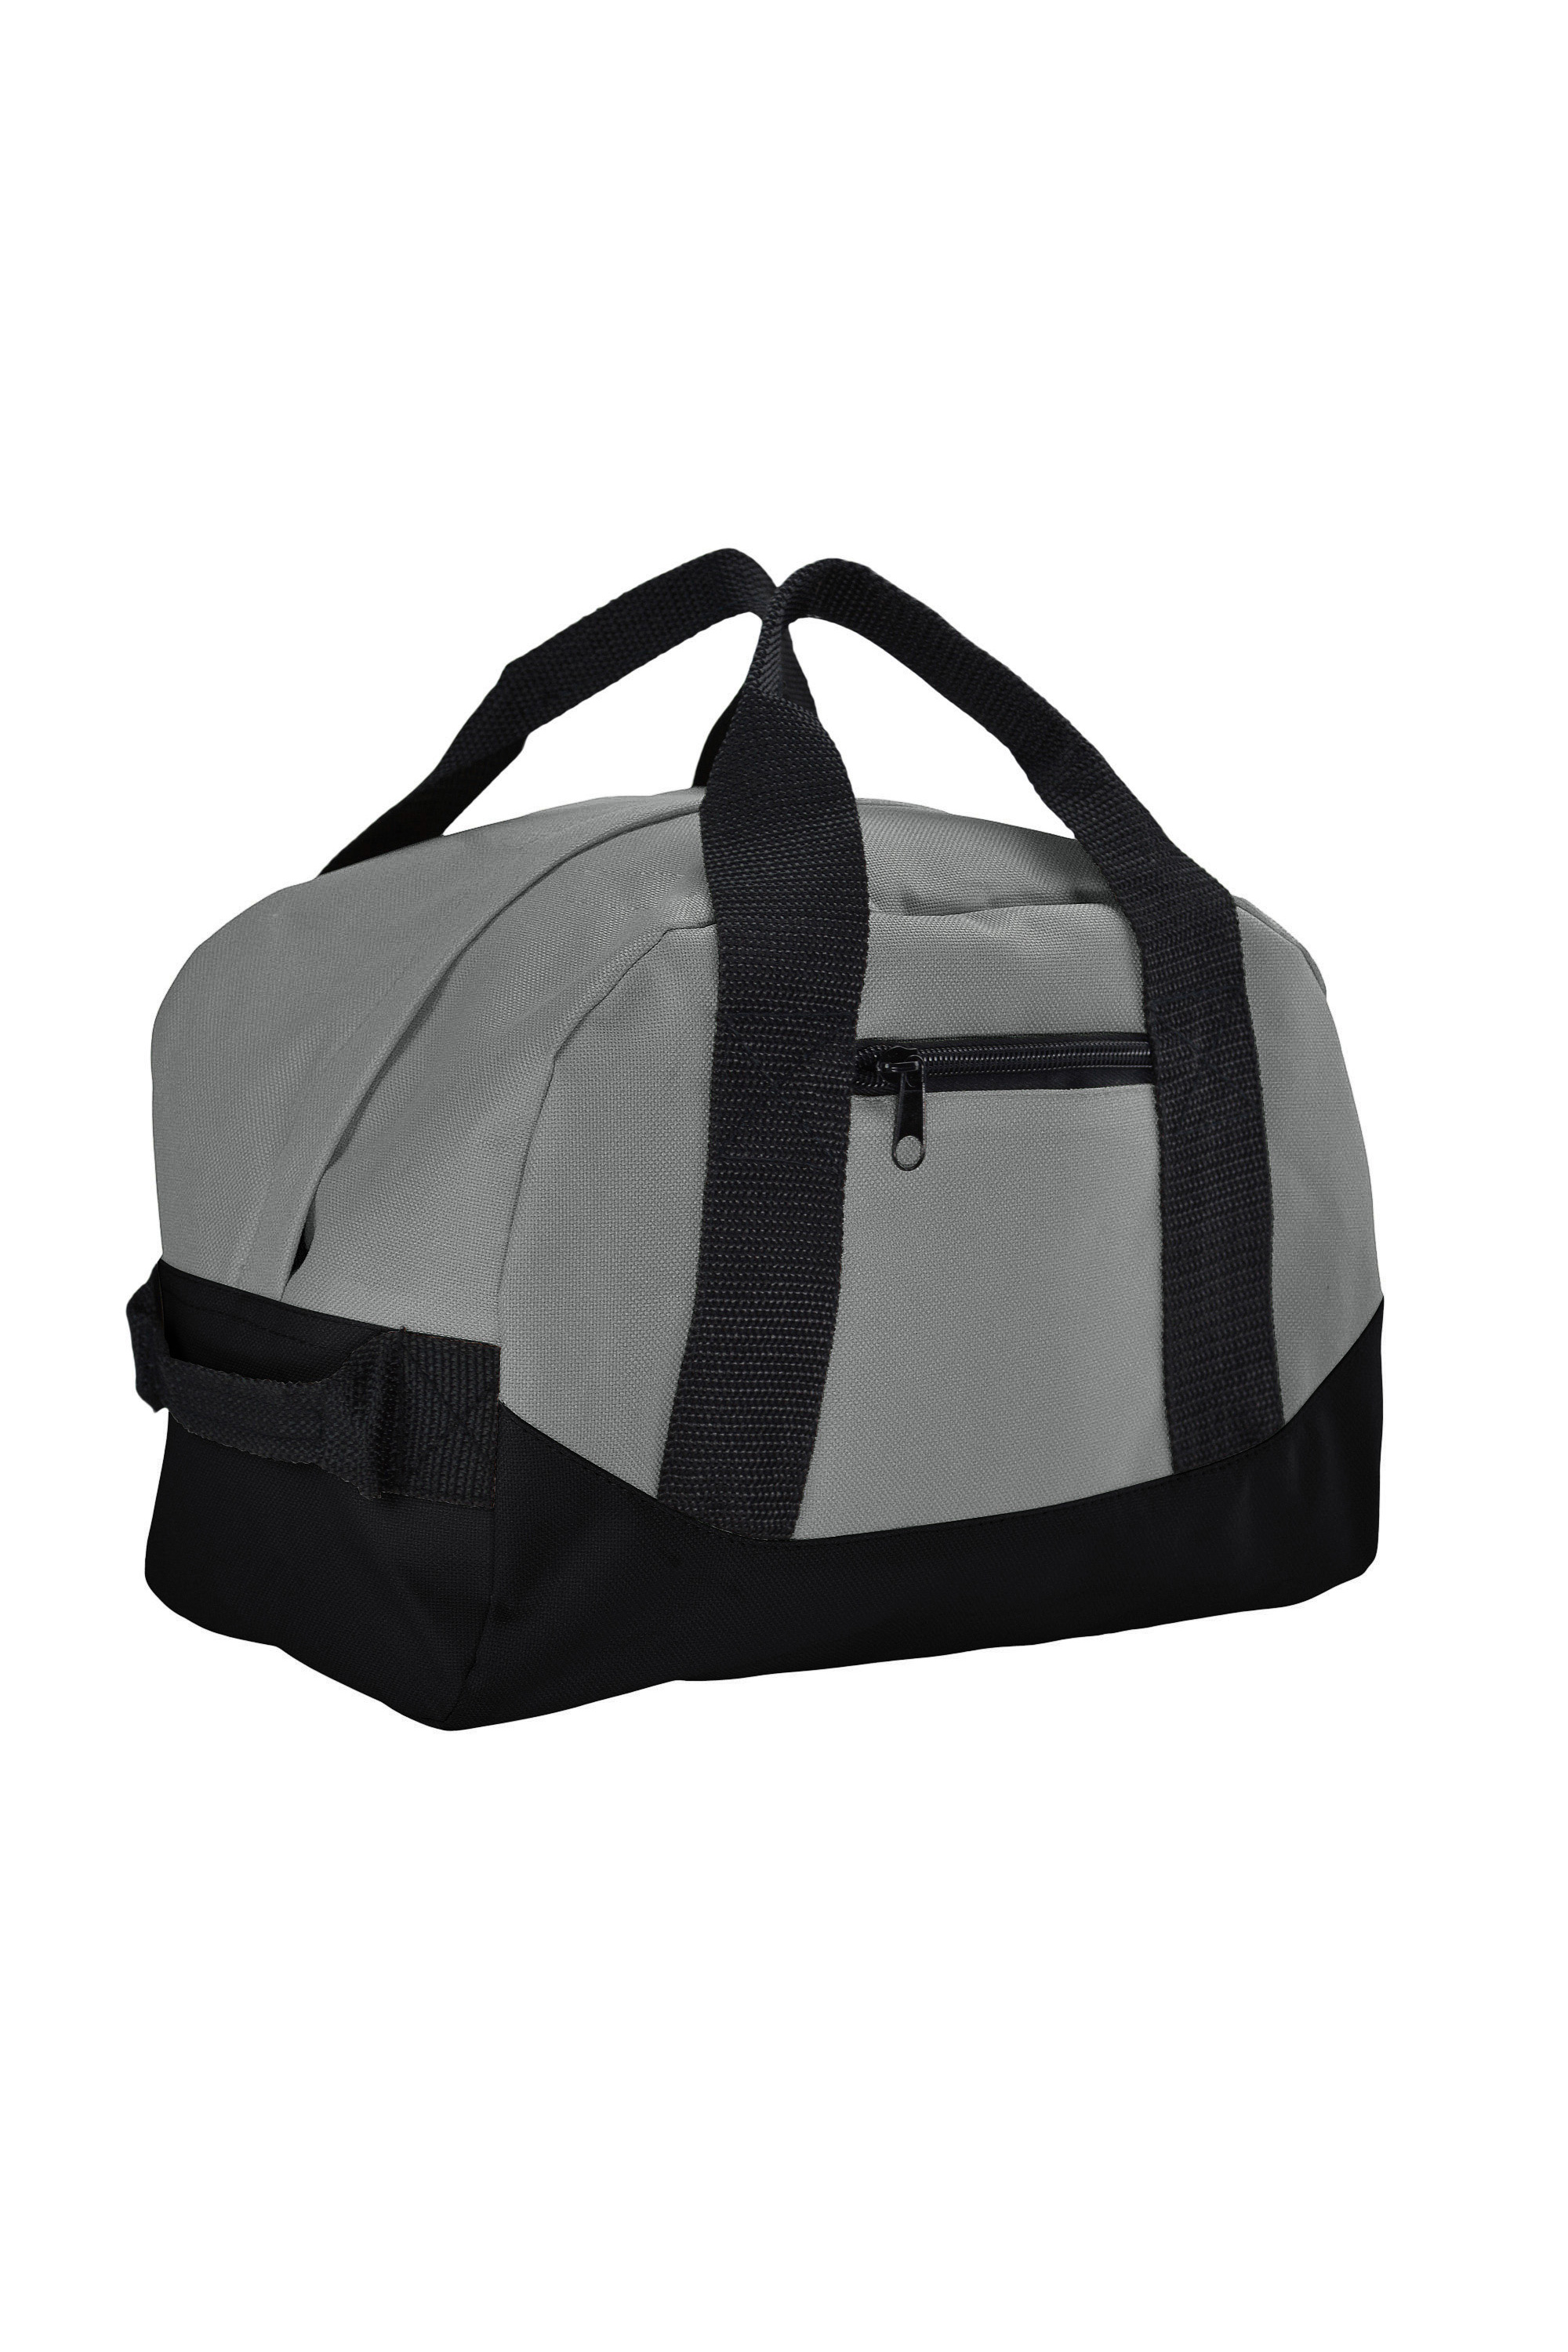 DALIX 12" Mini Duffel Bag Gym Duffle in Gray - image 1 of 8